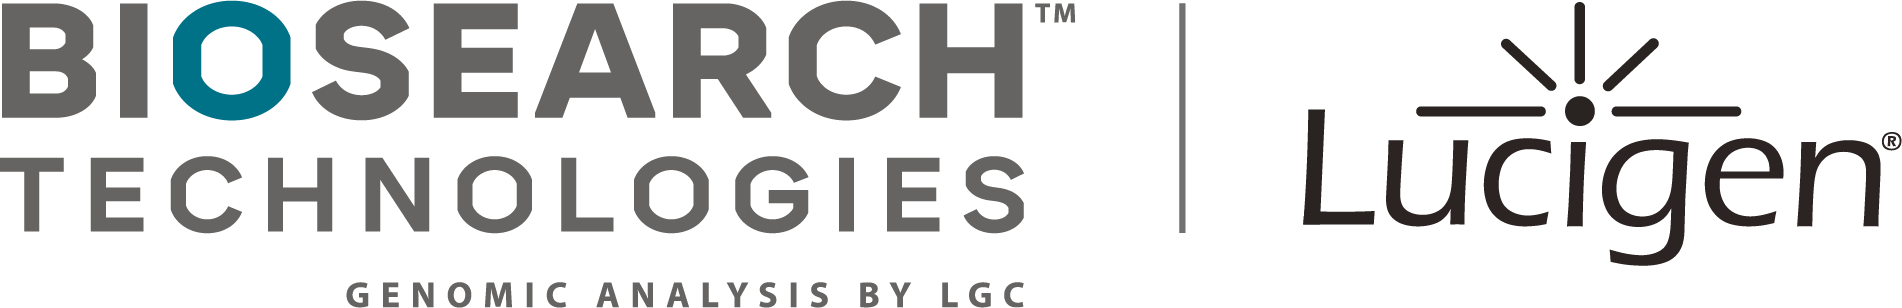 LGC Biosearch